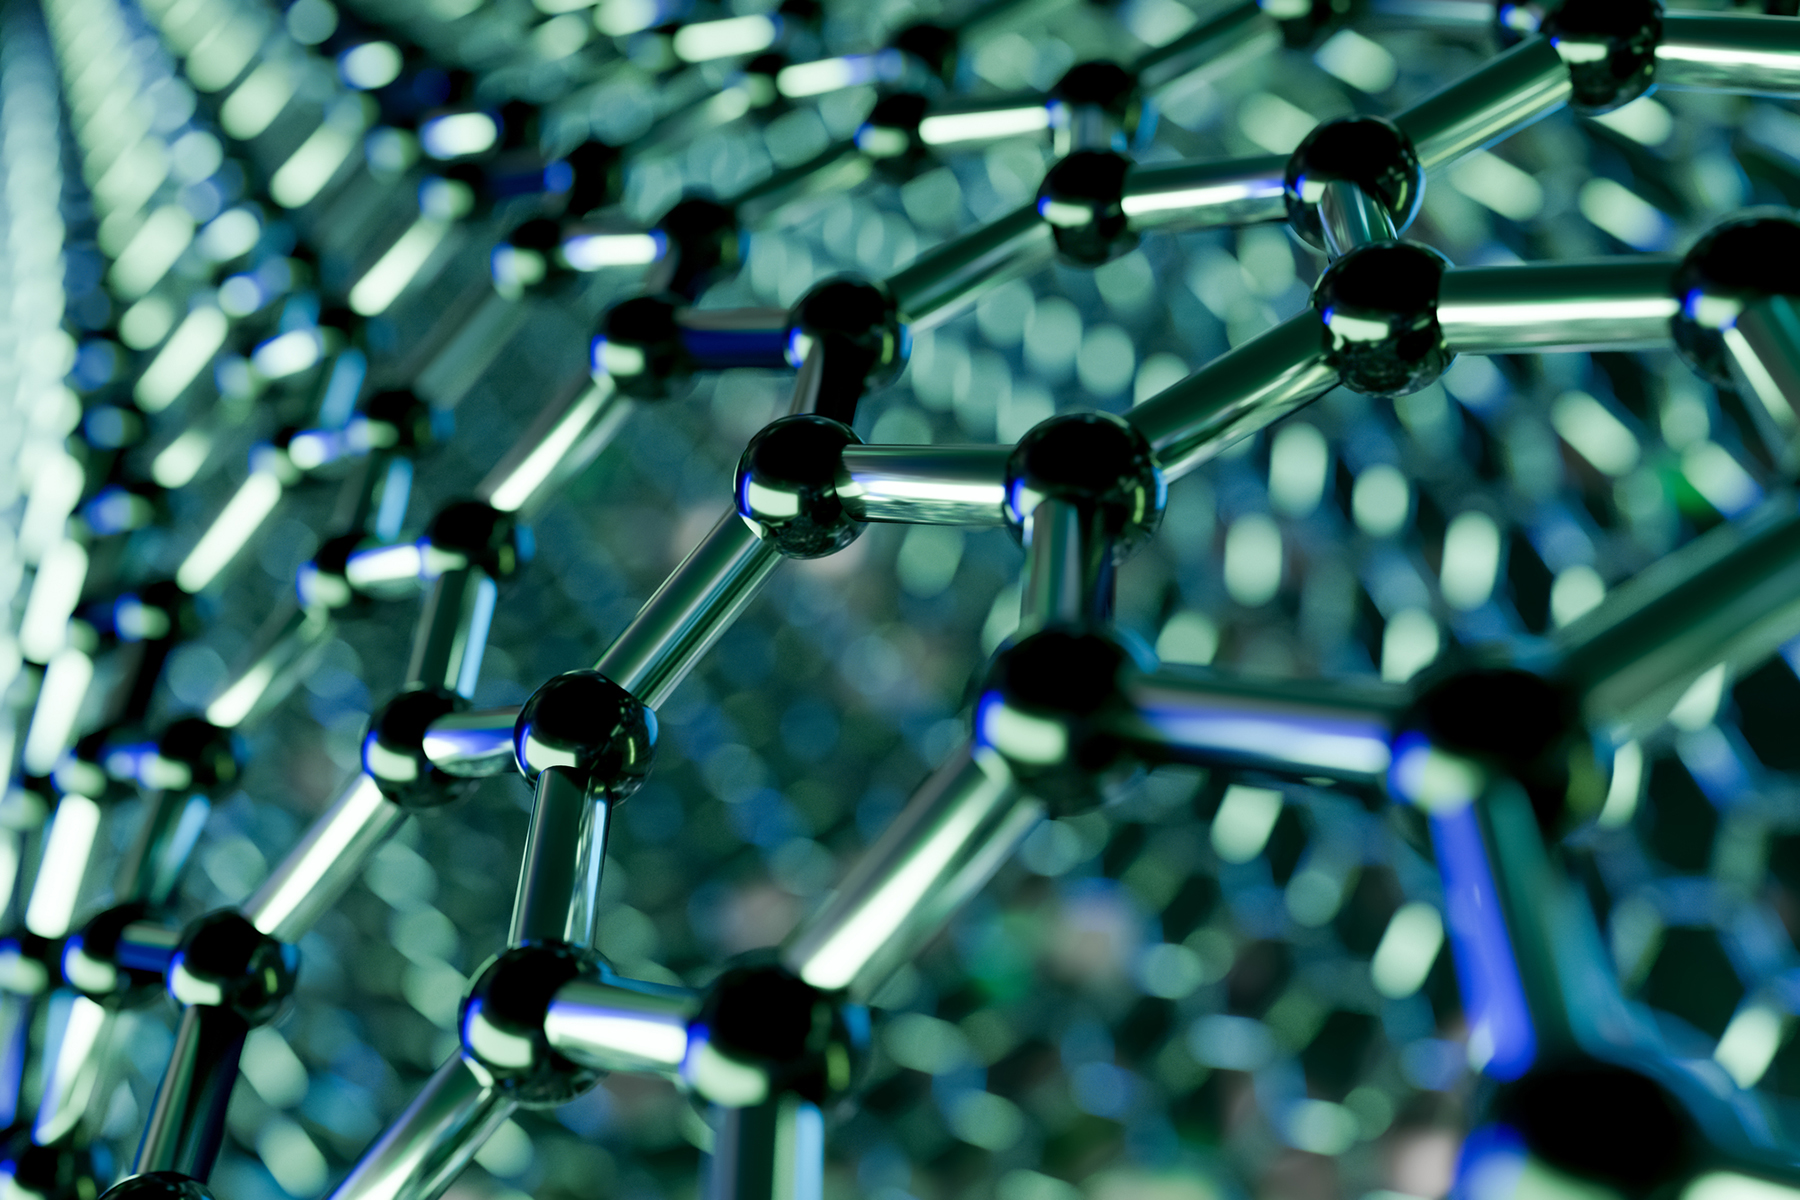 A 3D rendering of a graphene molecular nano technology structure